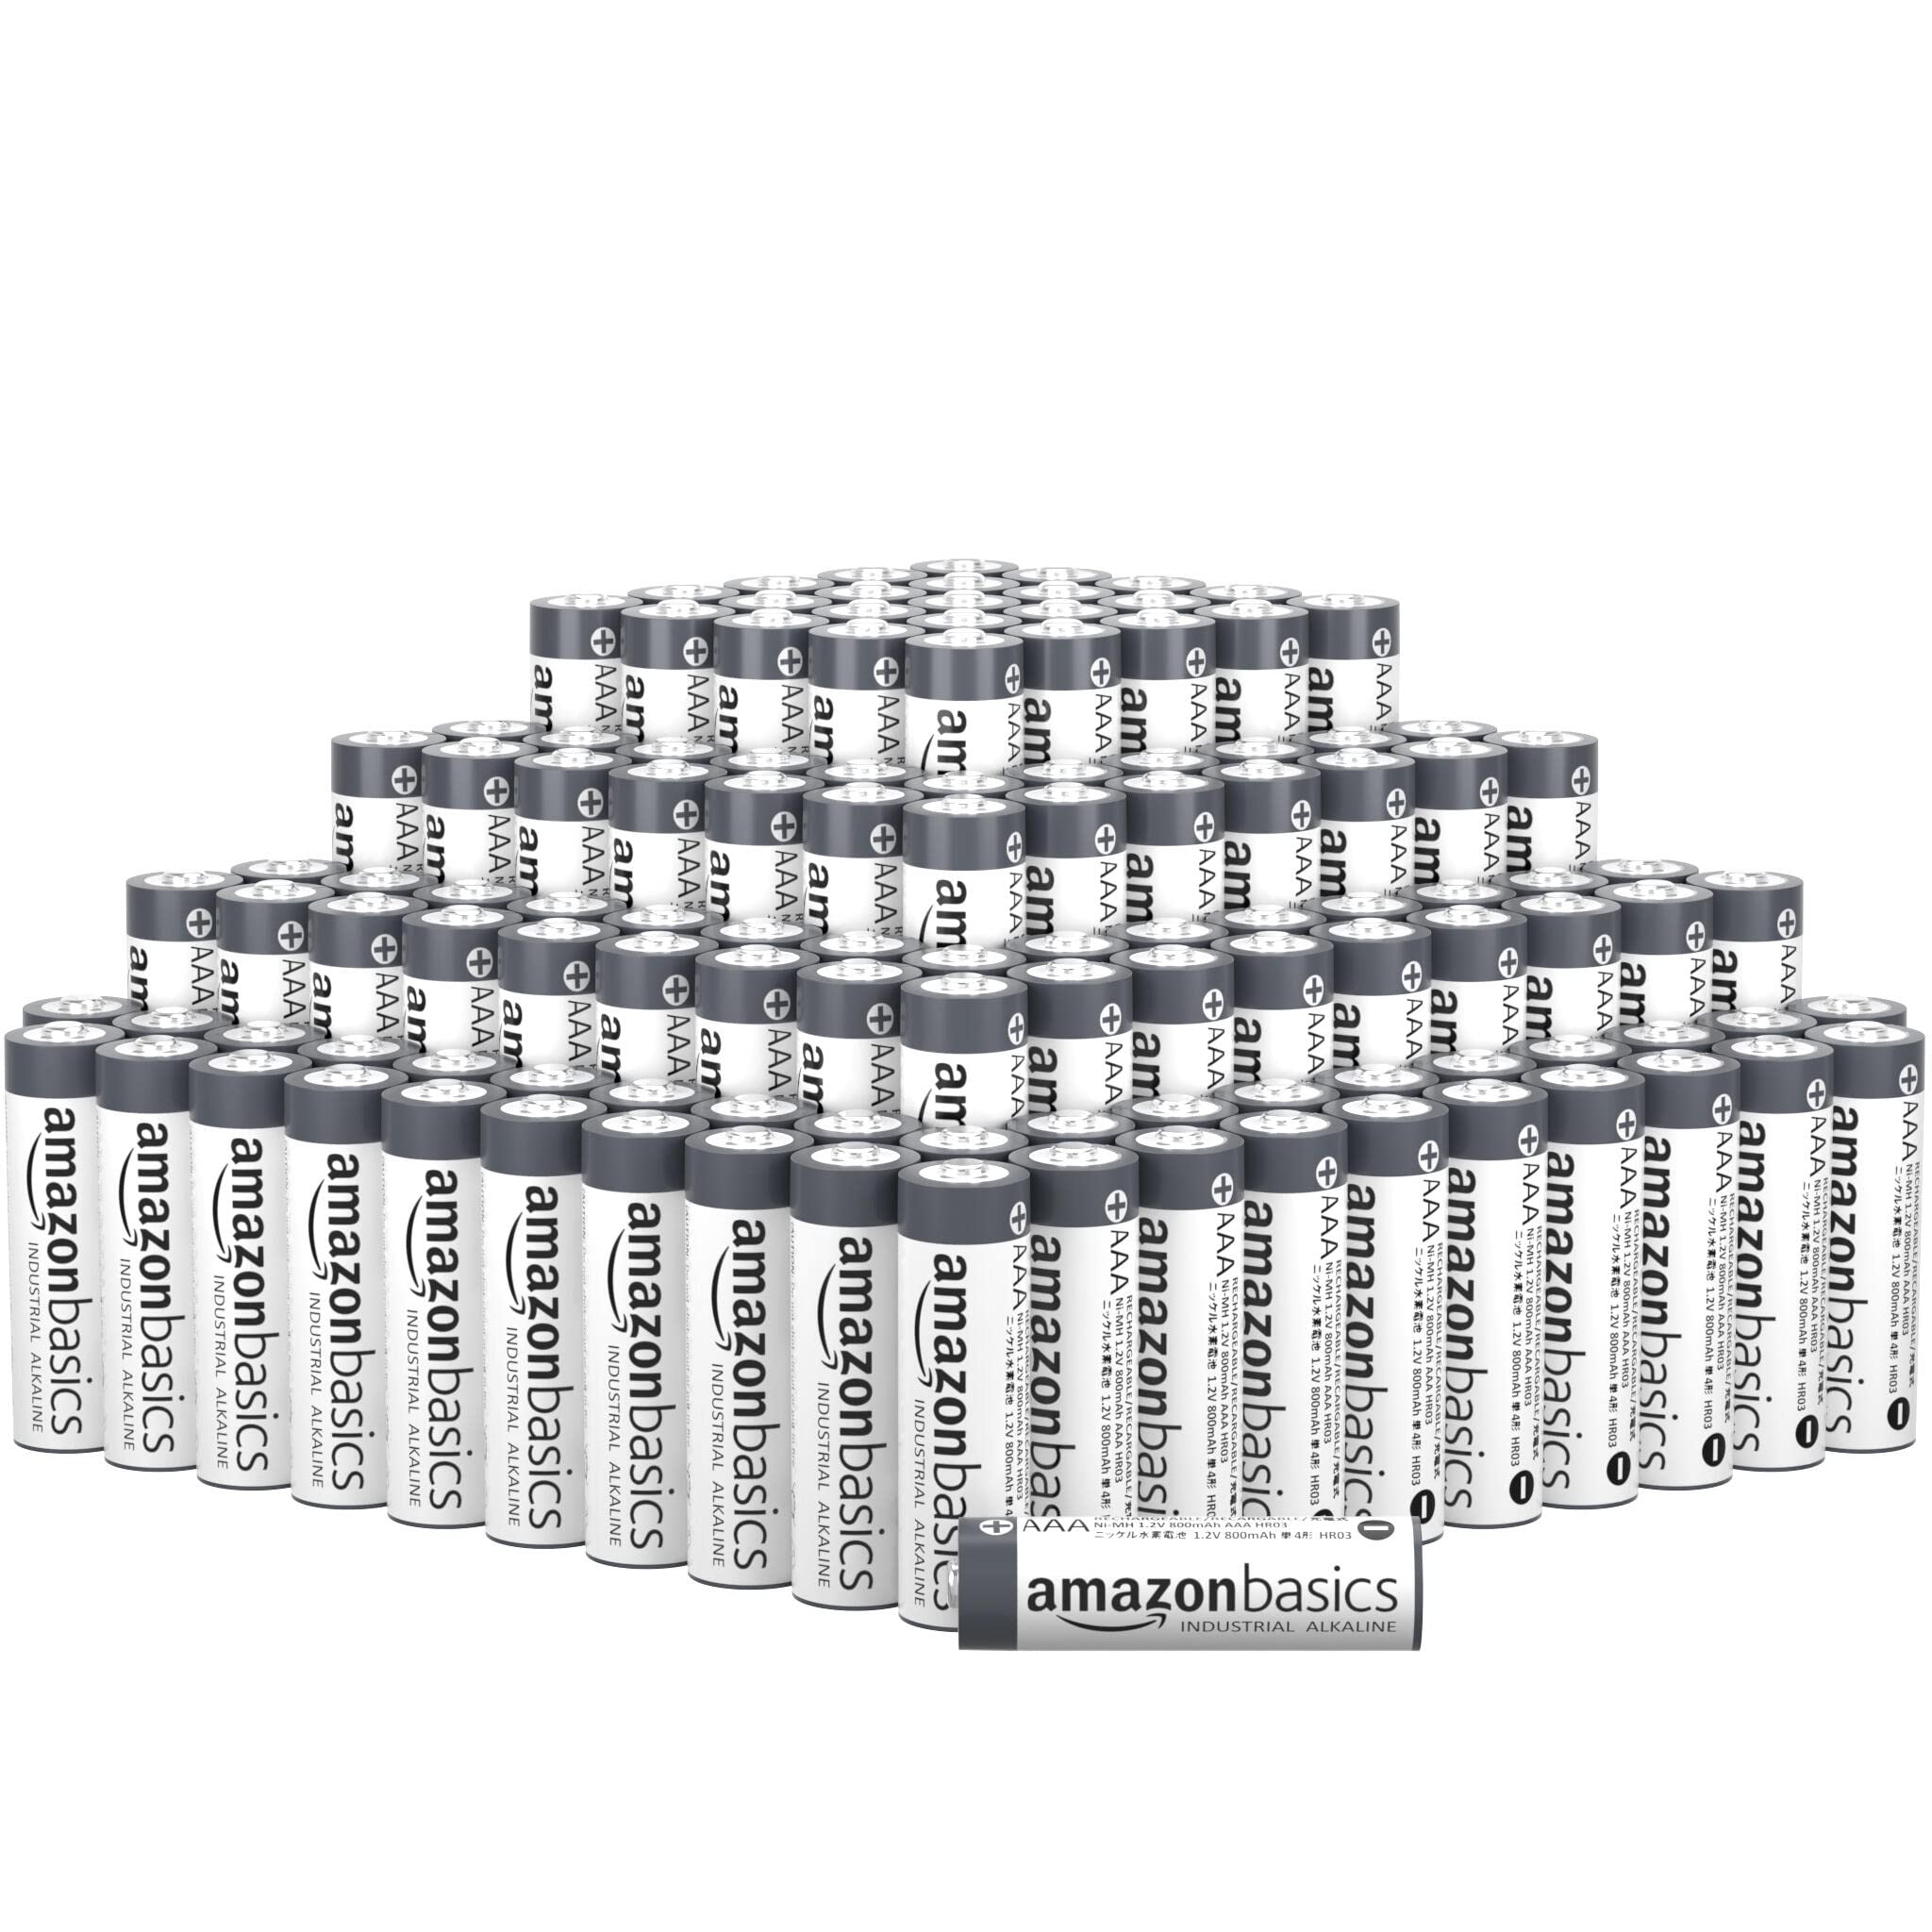 Amazon Basics 200-Pack AAA Alkaline Industrial Batteries, 1.5 Volt, 5-Year Shelf Life